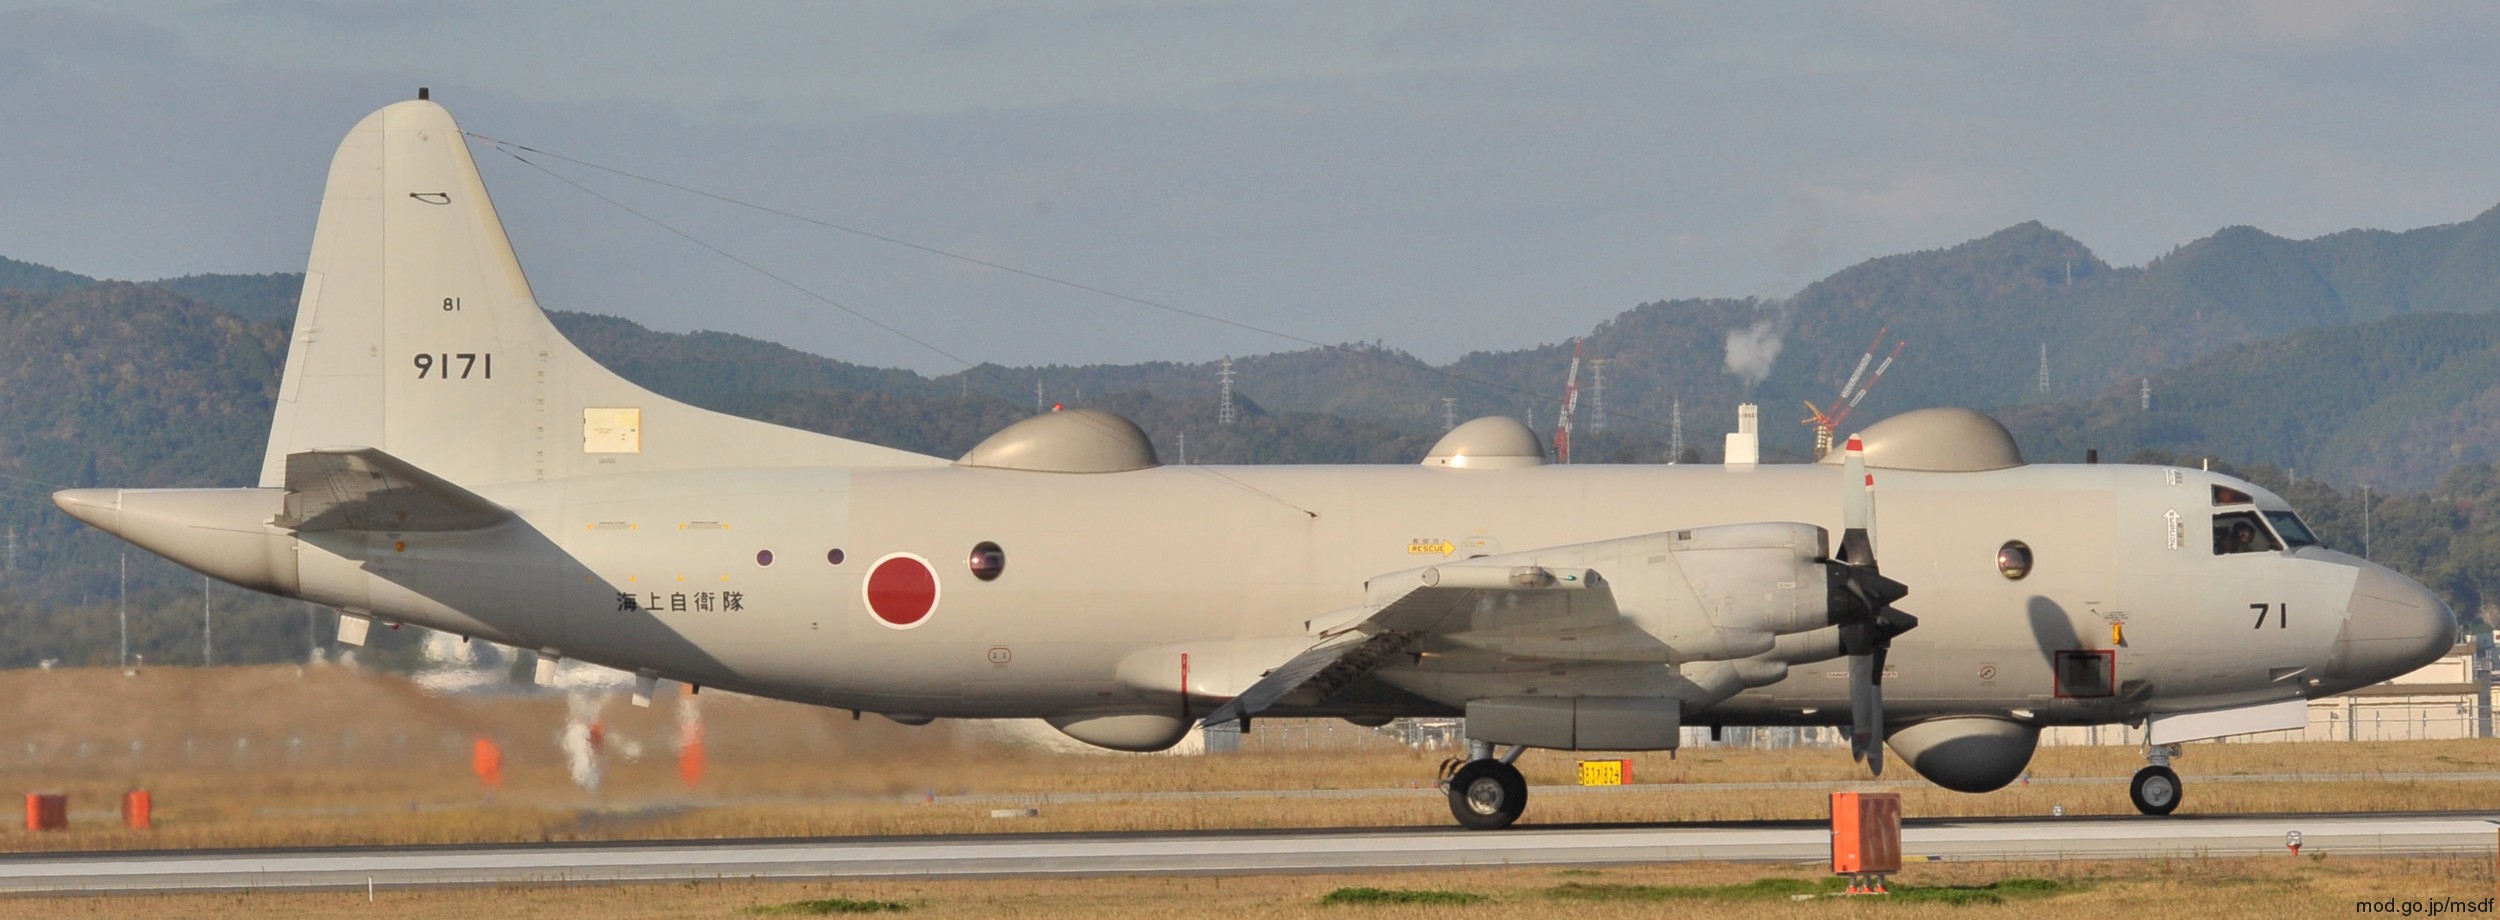 kawasaki ep-3 orion elint patrol aircraft mpa japan maritime self defense force jmsdf 9171 03